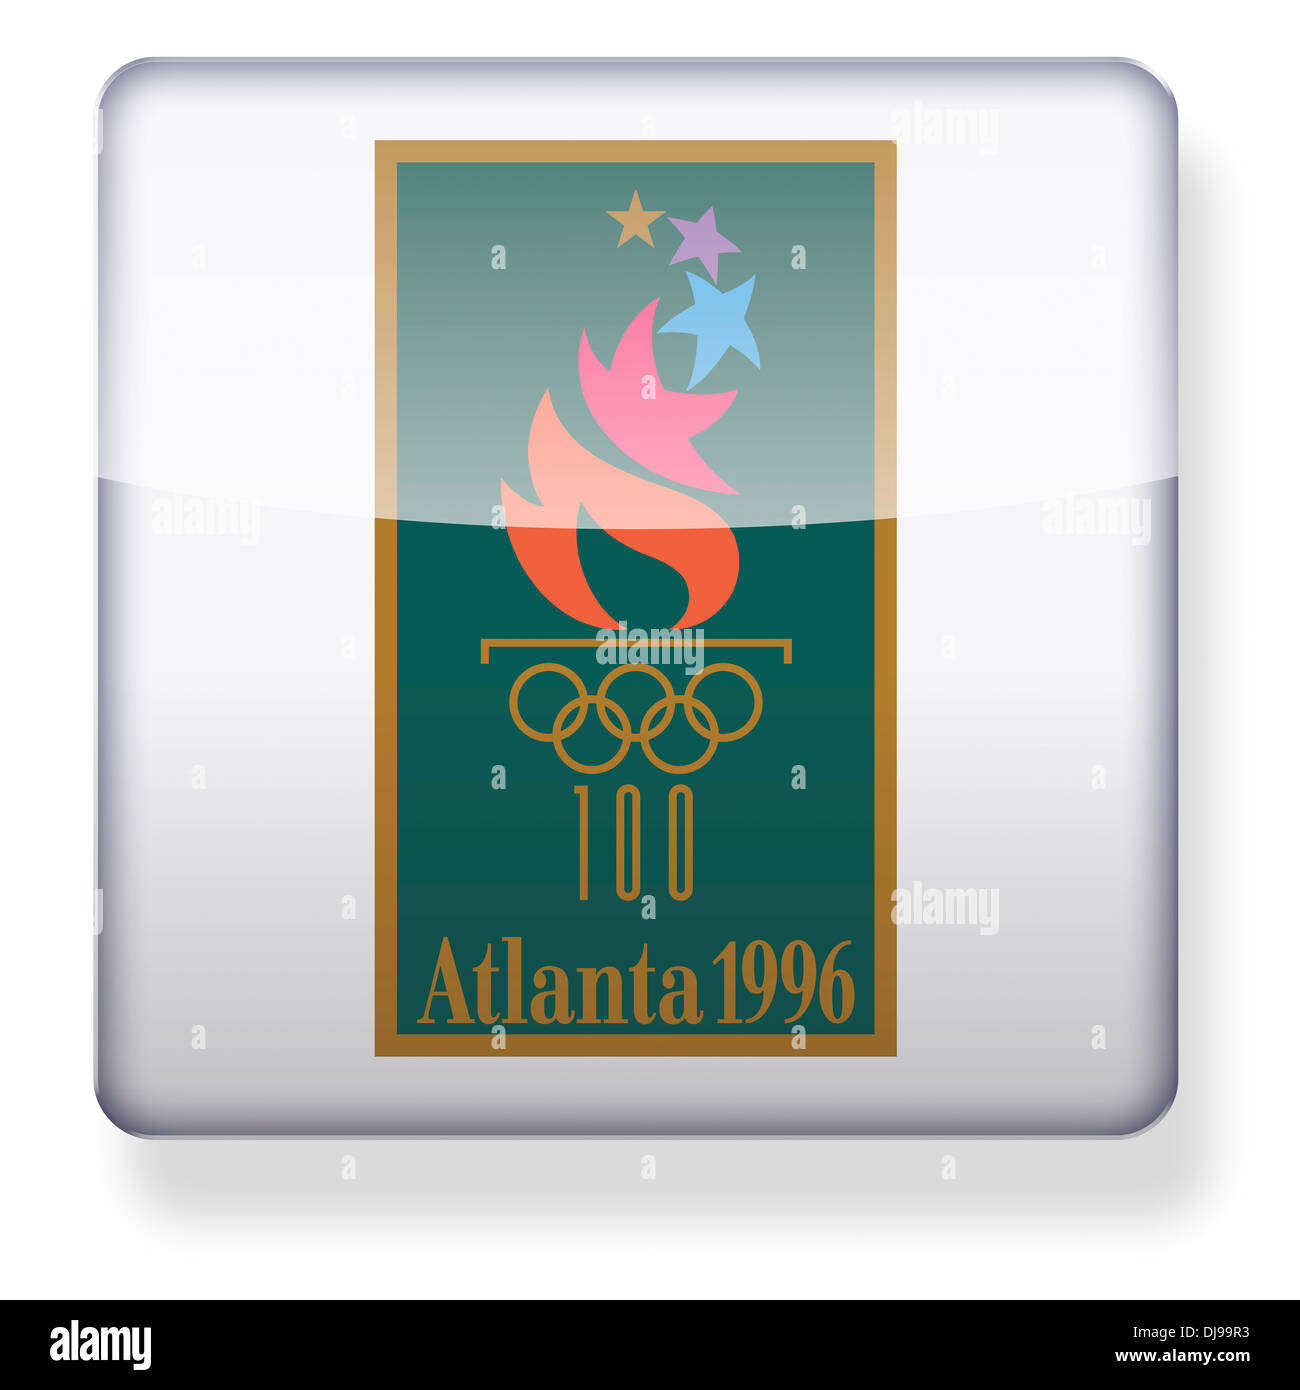 Atlanta 1996 Olympics logo as an app icon. Clipping path included. Stock Photo